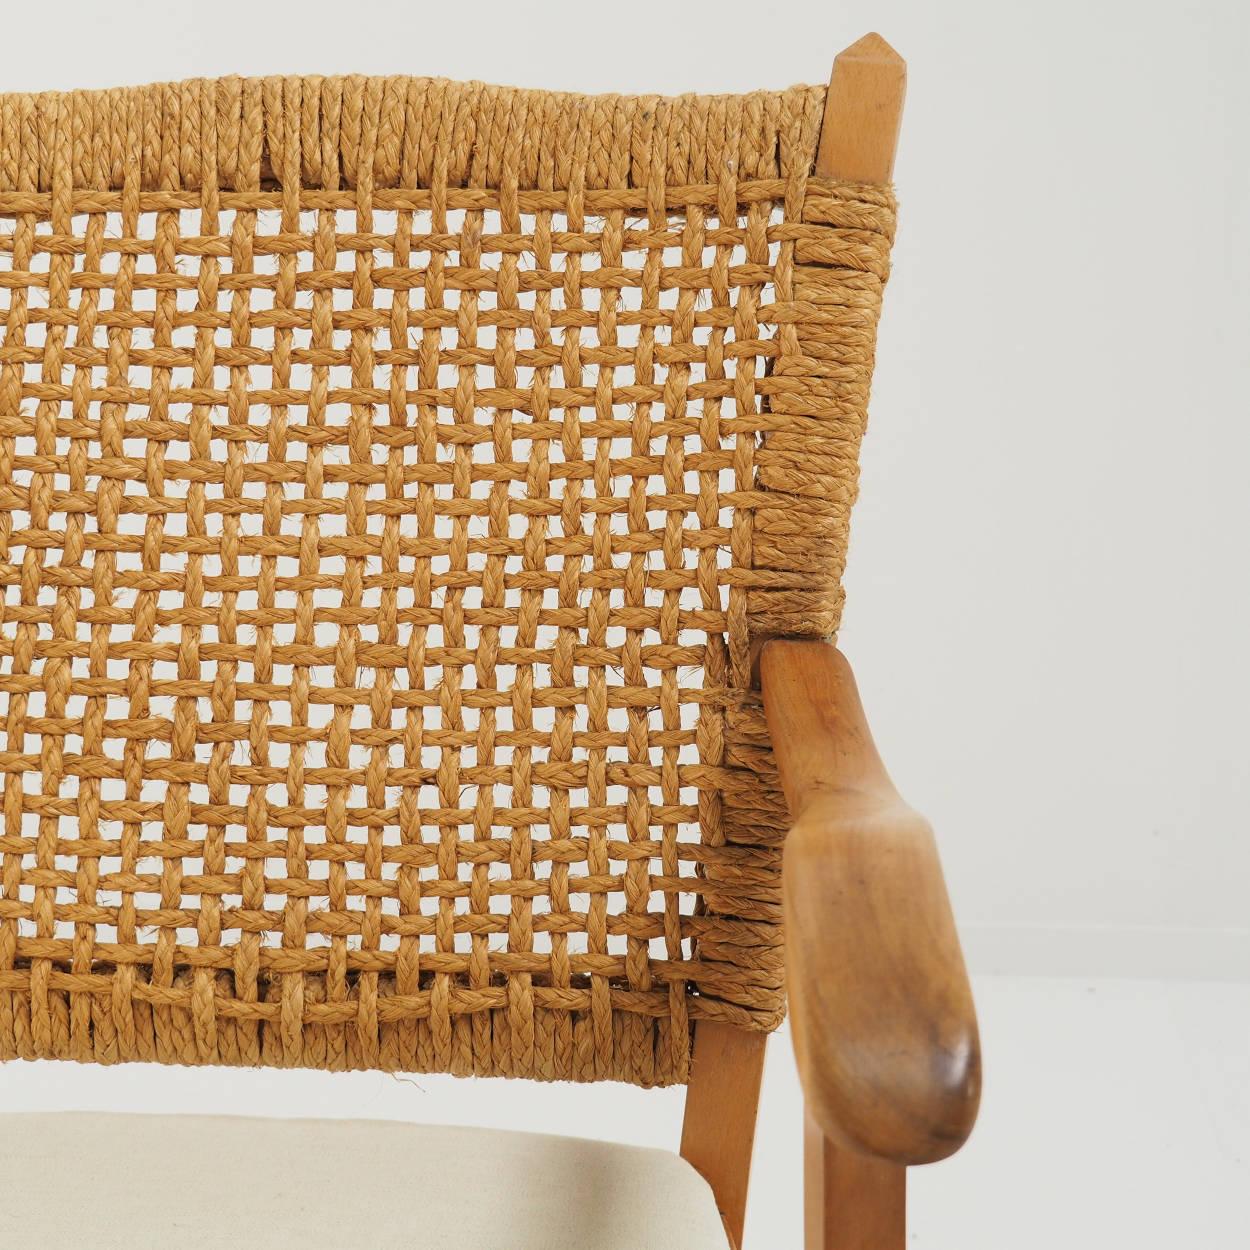 Raffia 1930s Modernist Rope Chair attr. to Bas Van Pelt, The Netherlands